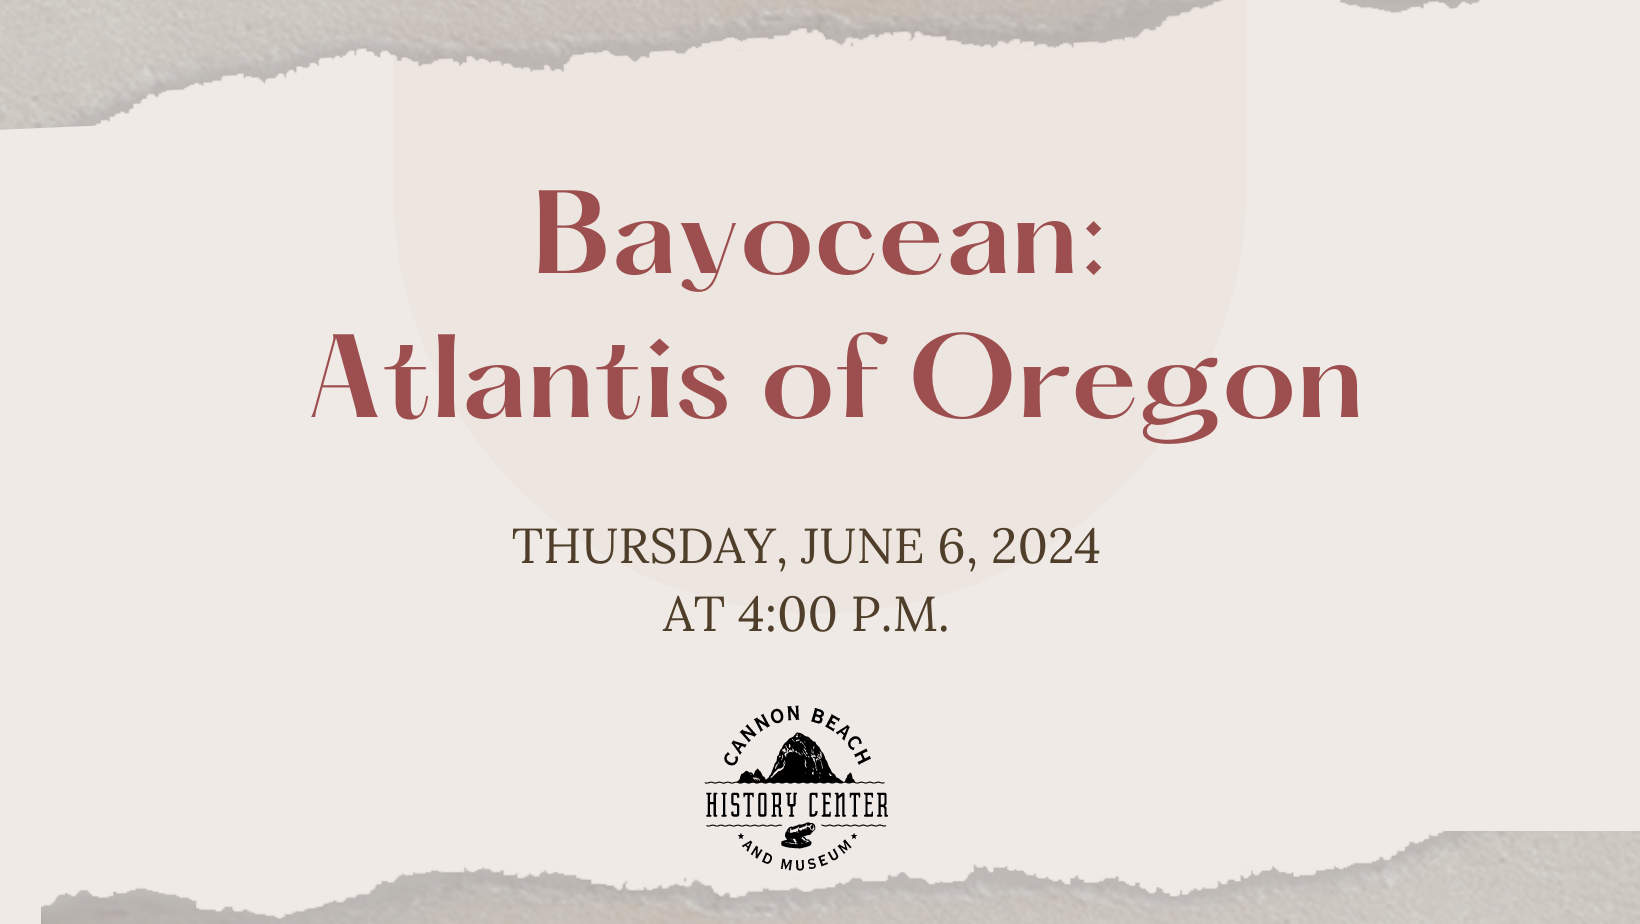 Bayocean: Atlantis of Oregon